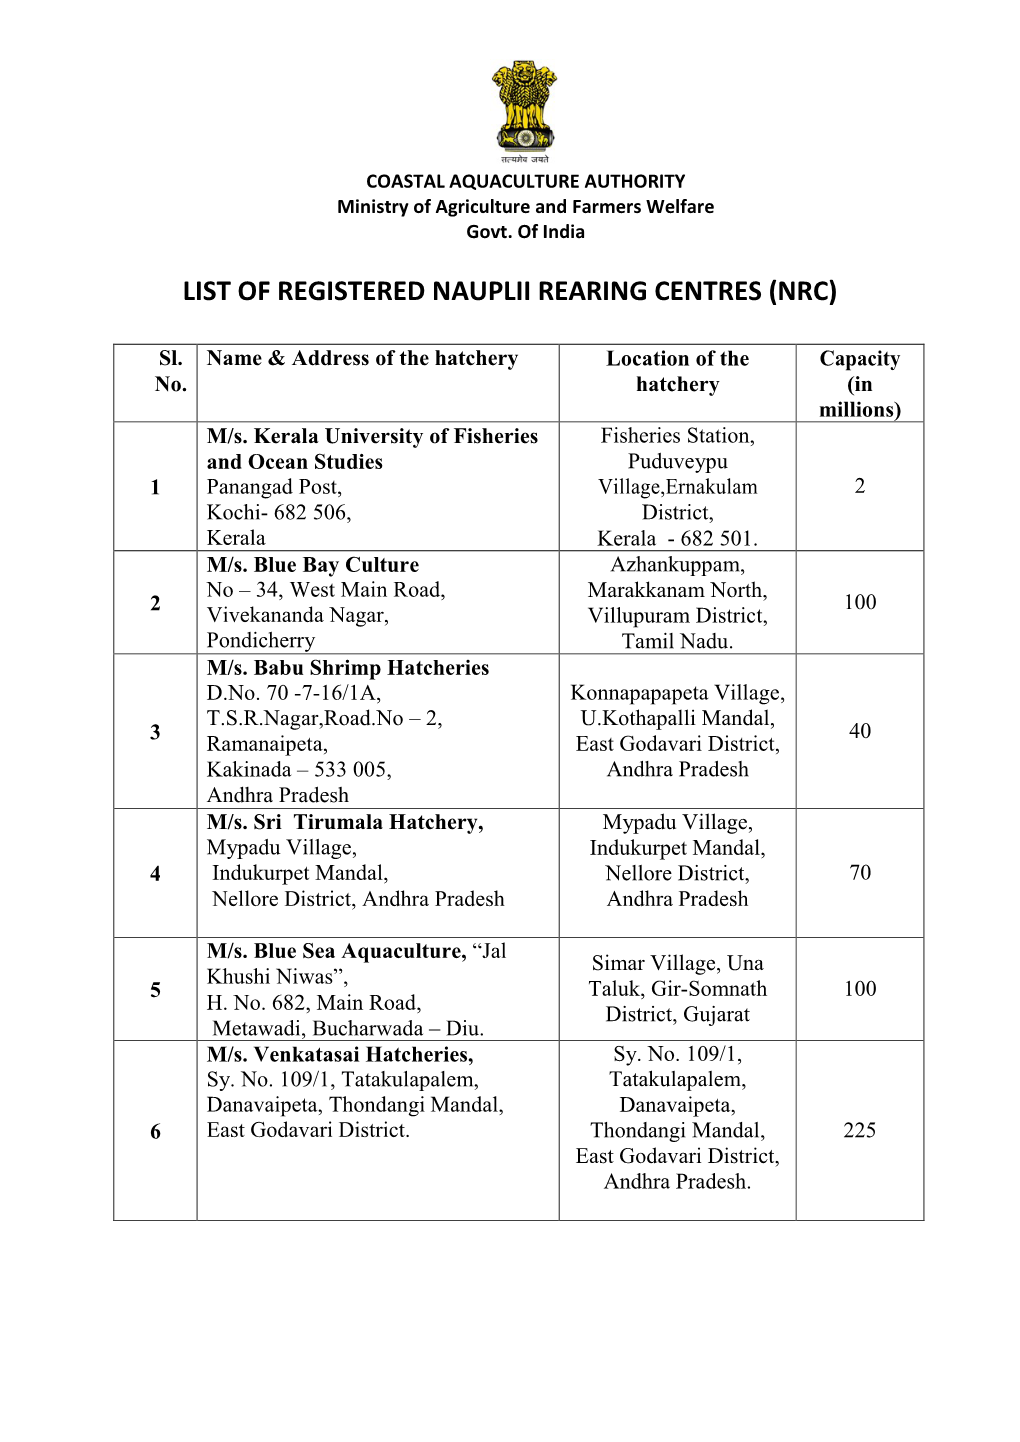 List of Registered Nauplii Rearing Centres (Nrc)